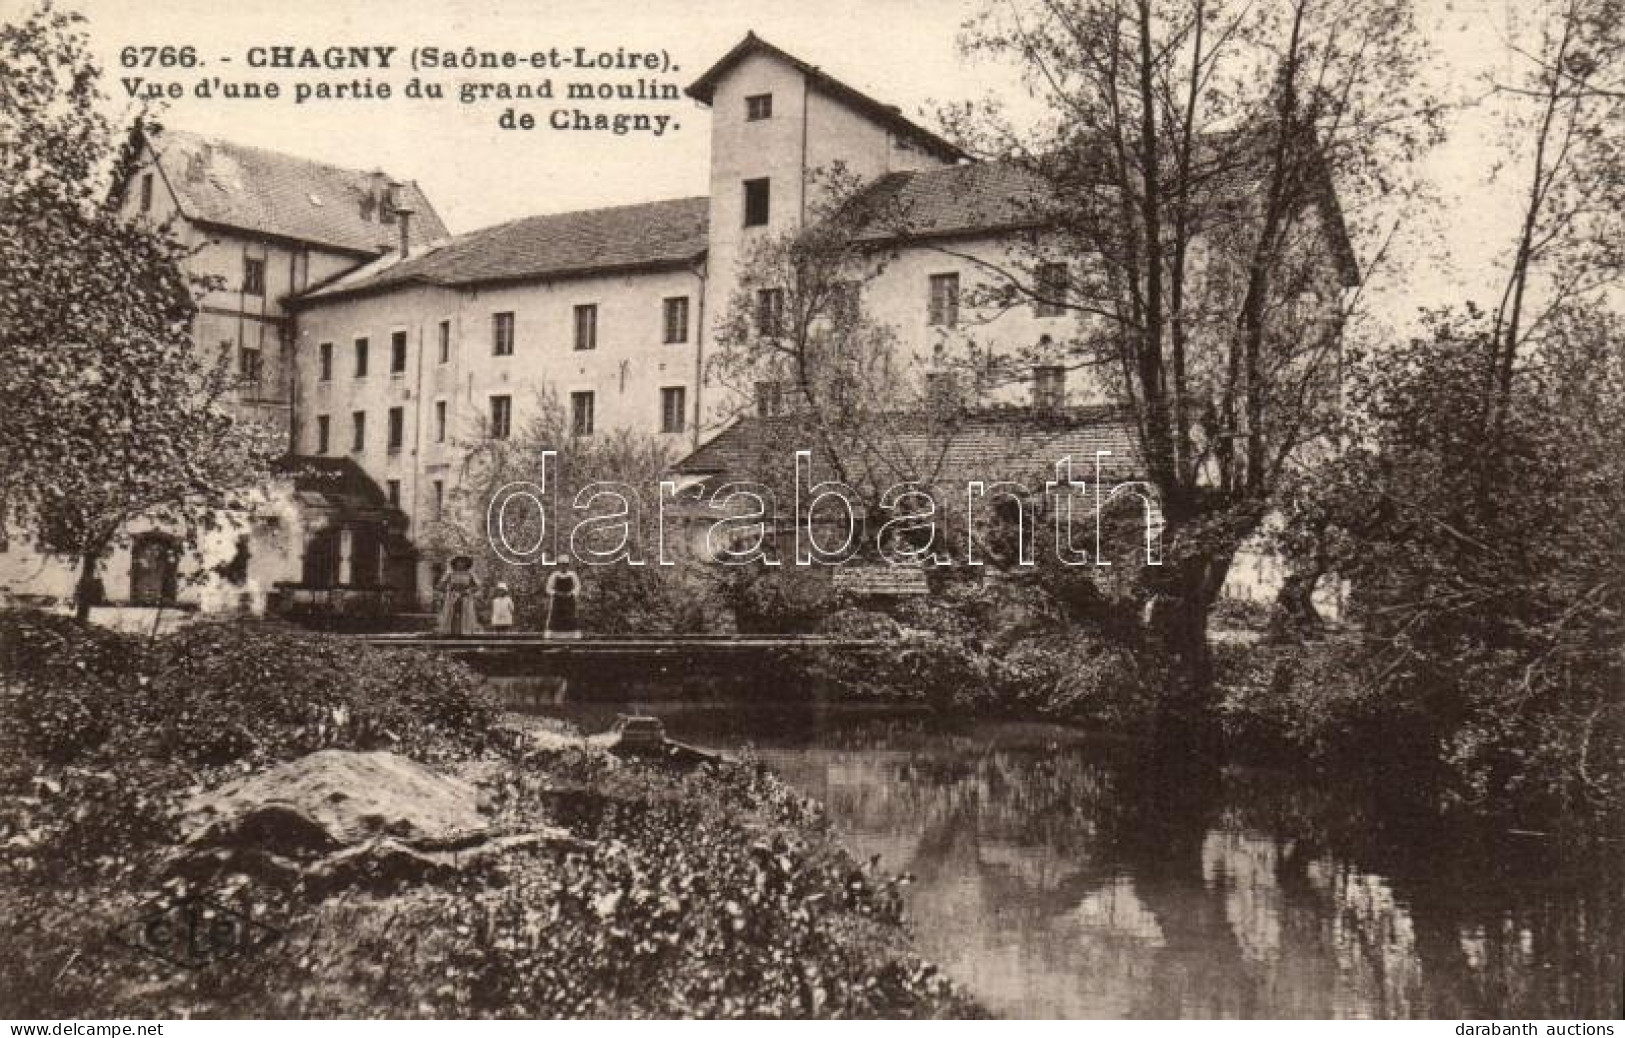 ** T2 Chagny (Saone-et-Loire) Grand Moulin / Mill - Unclassified